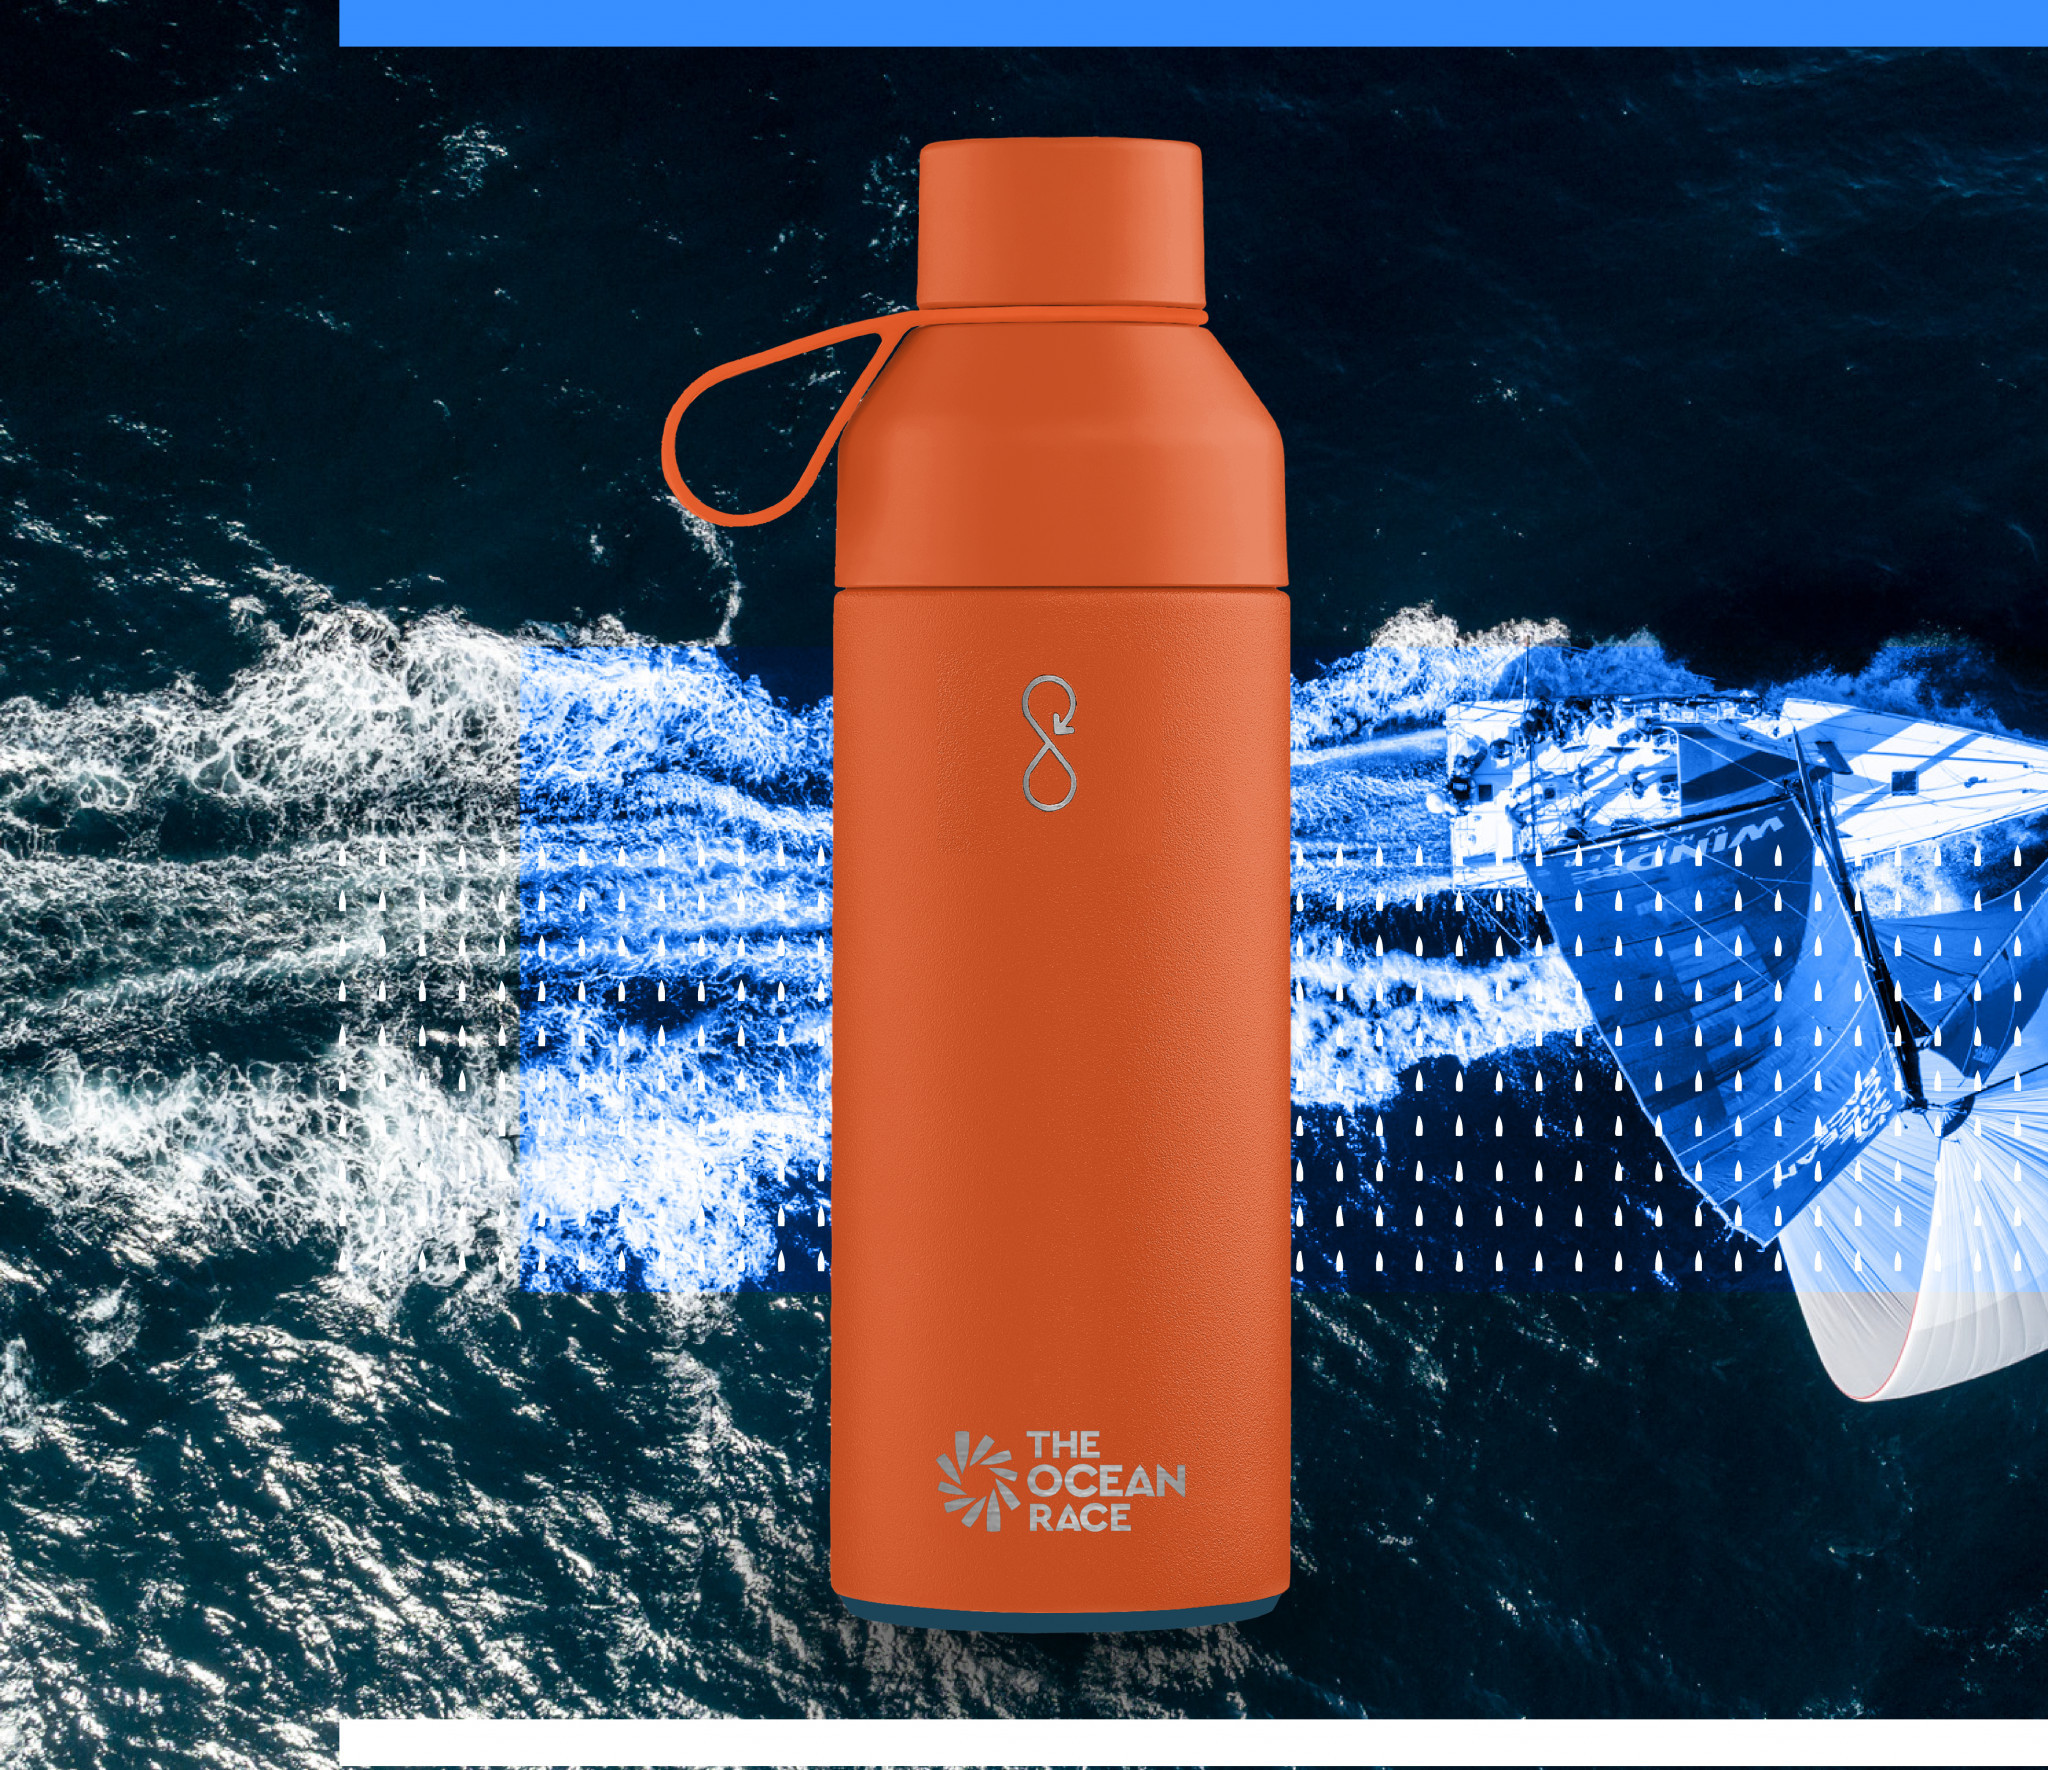 Ocean Race organisers partner with Ocean Bottle to reduce plastic waste